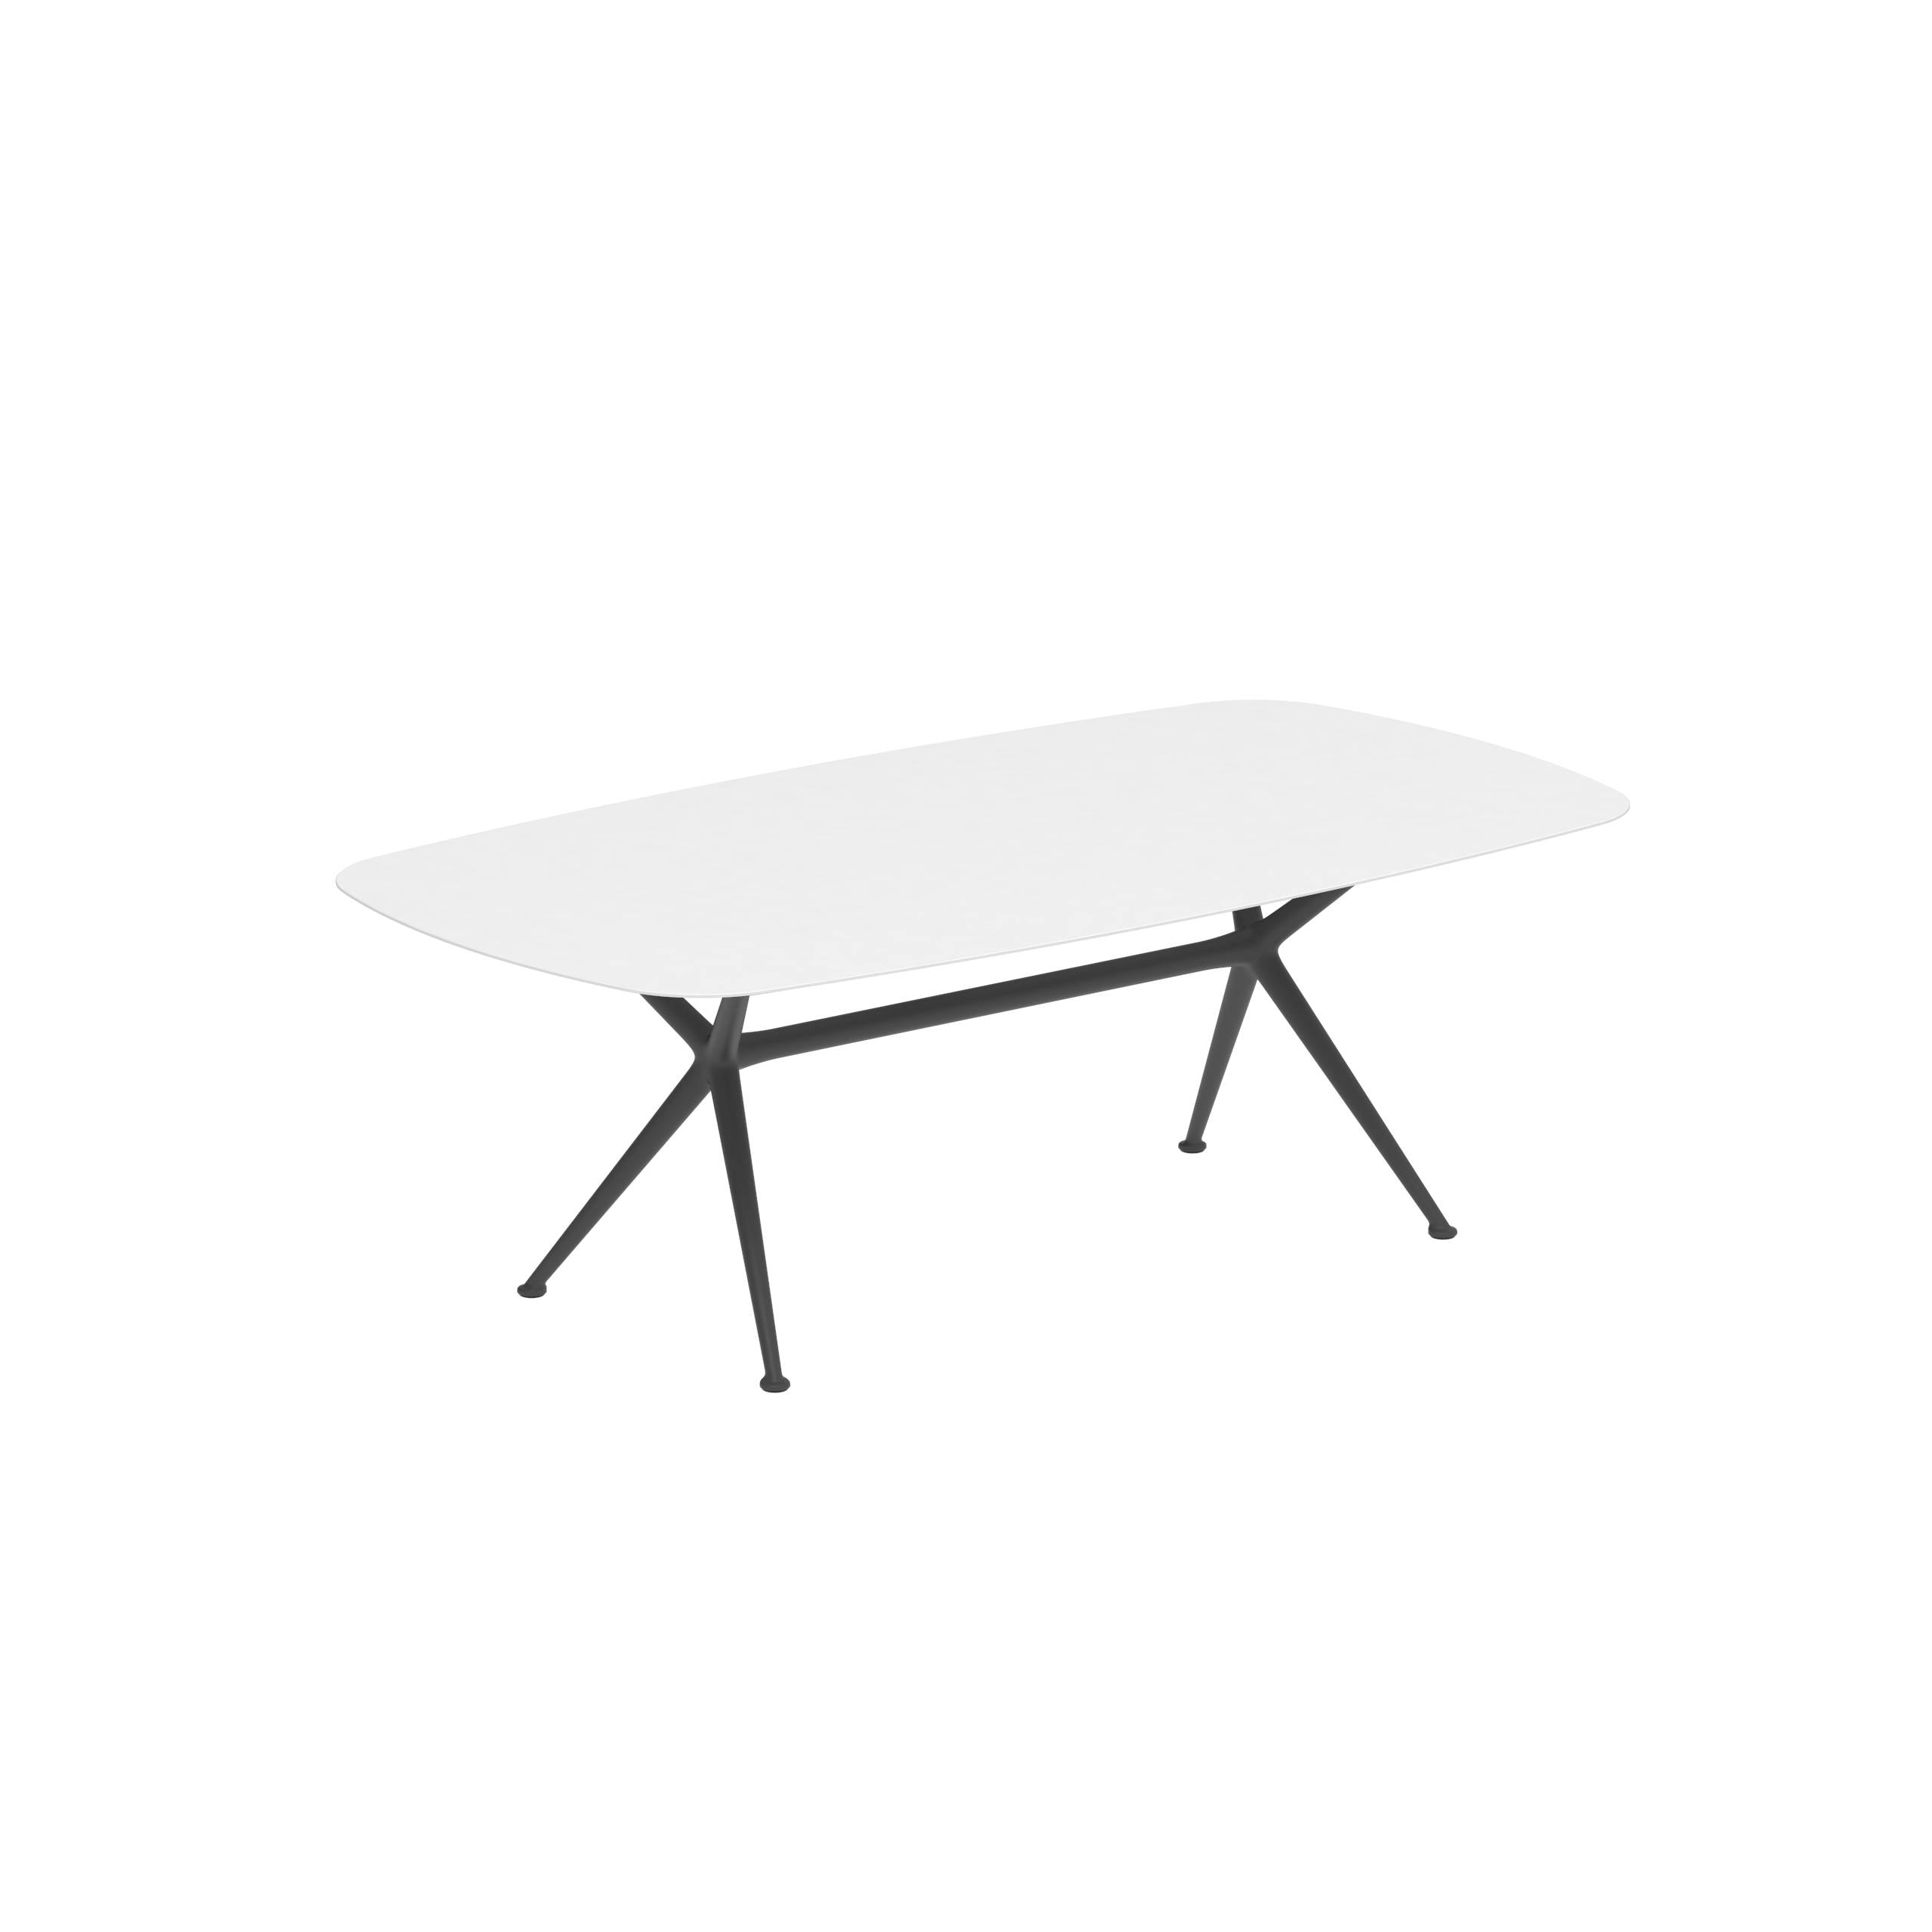 Exes Table 220x120cm Alu Legs Anthracite - Table Top Ceramic White